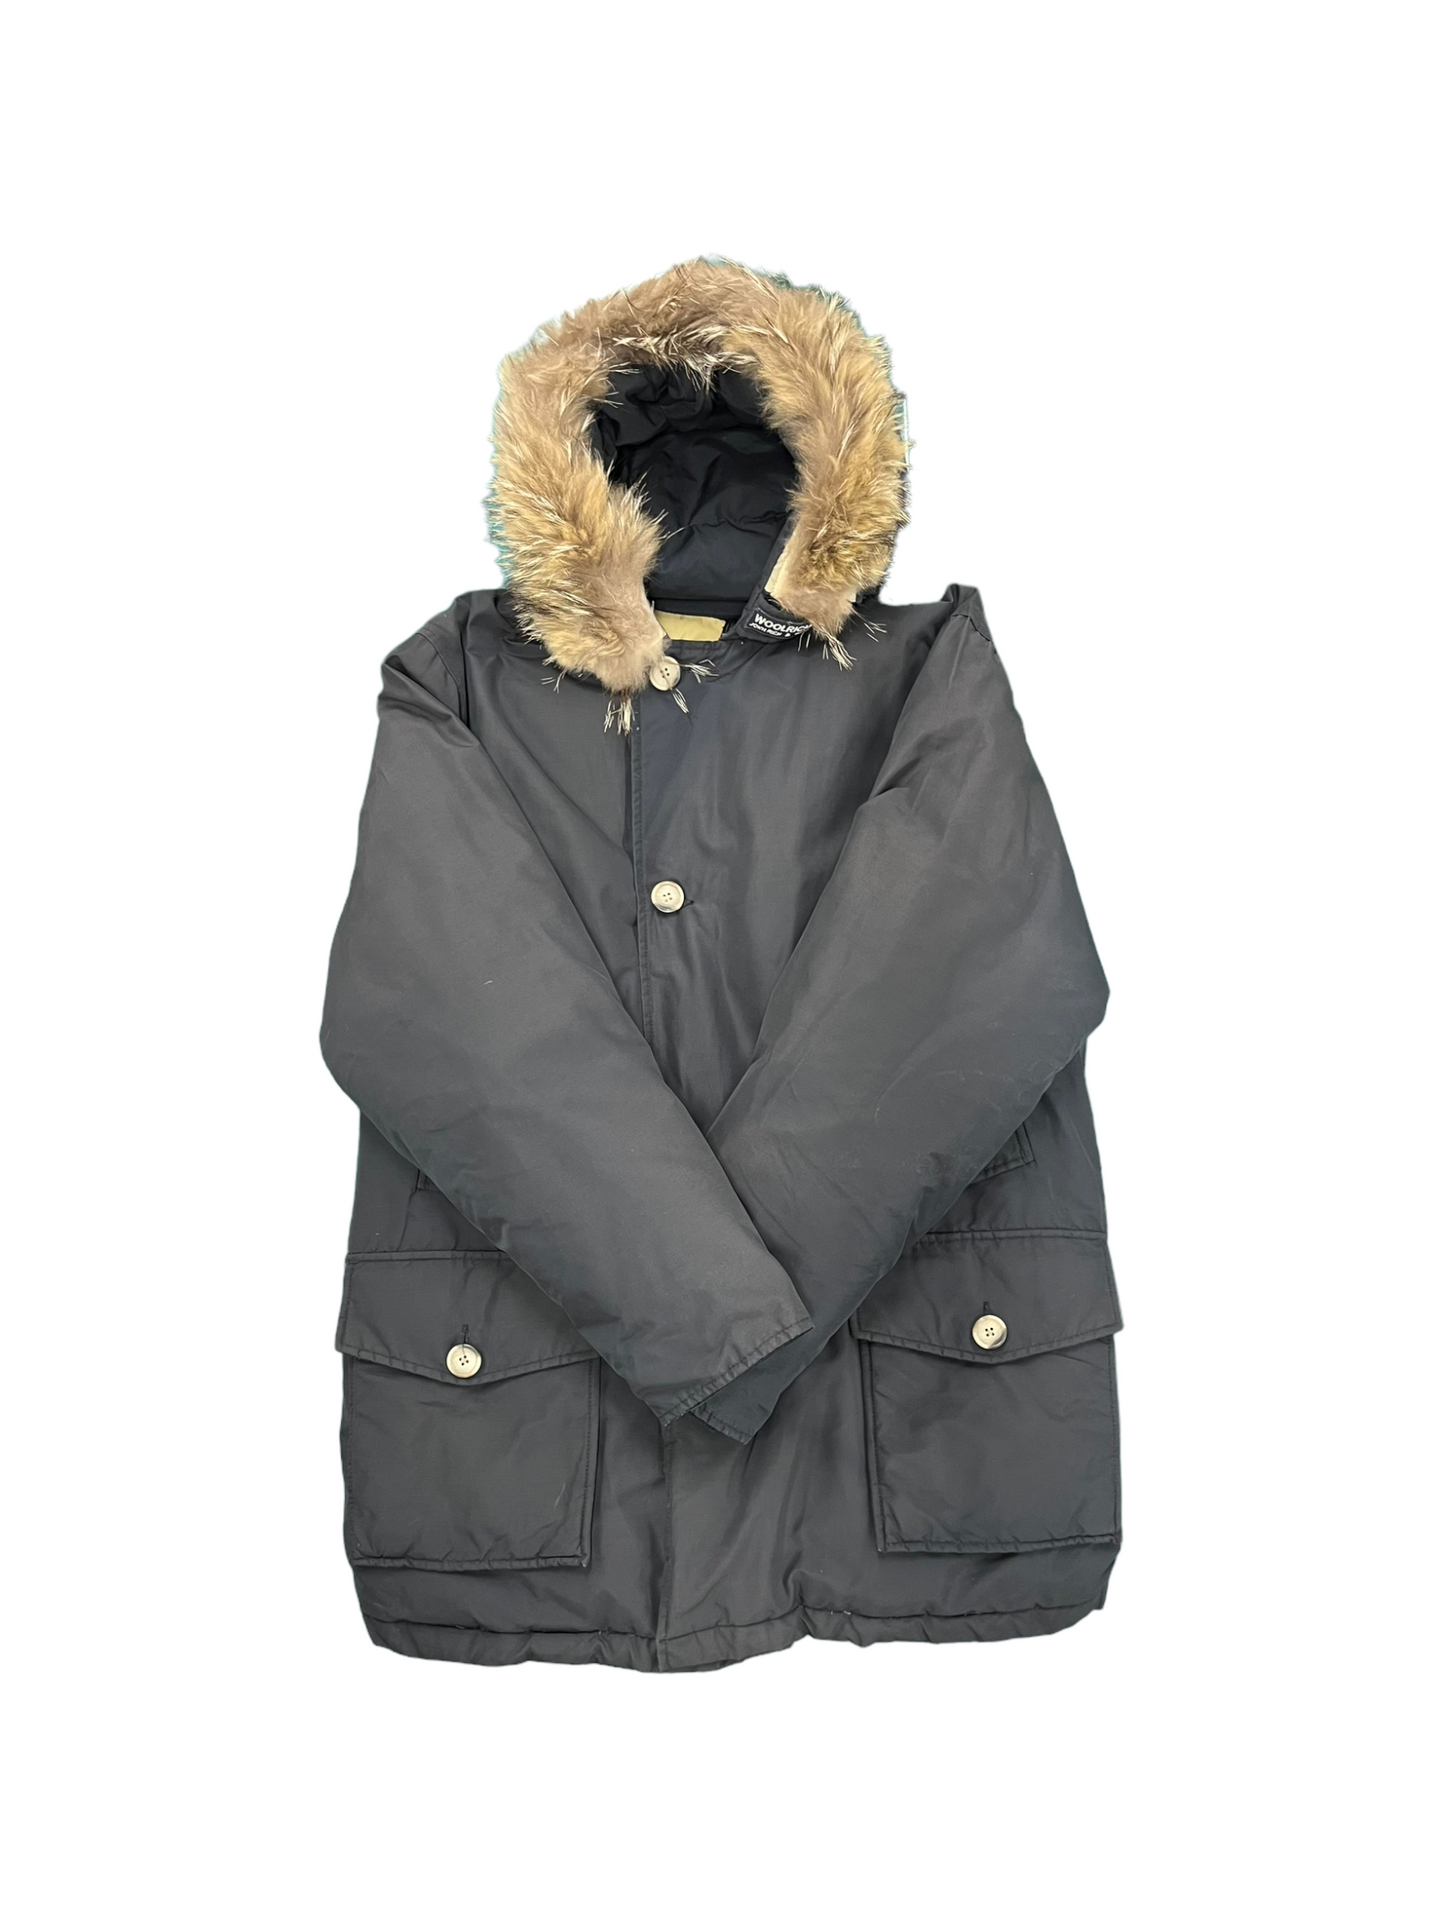 Mens Insulated Winter Coat - L